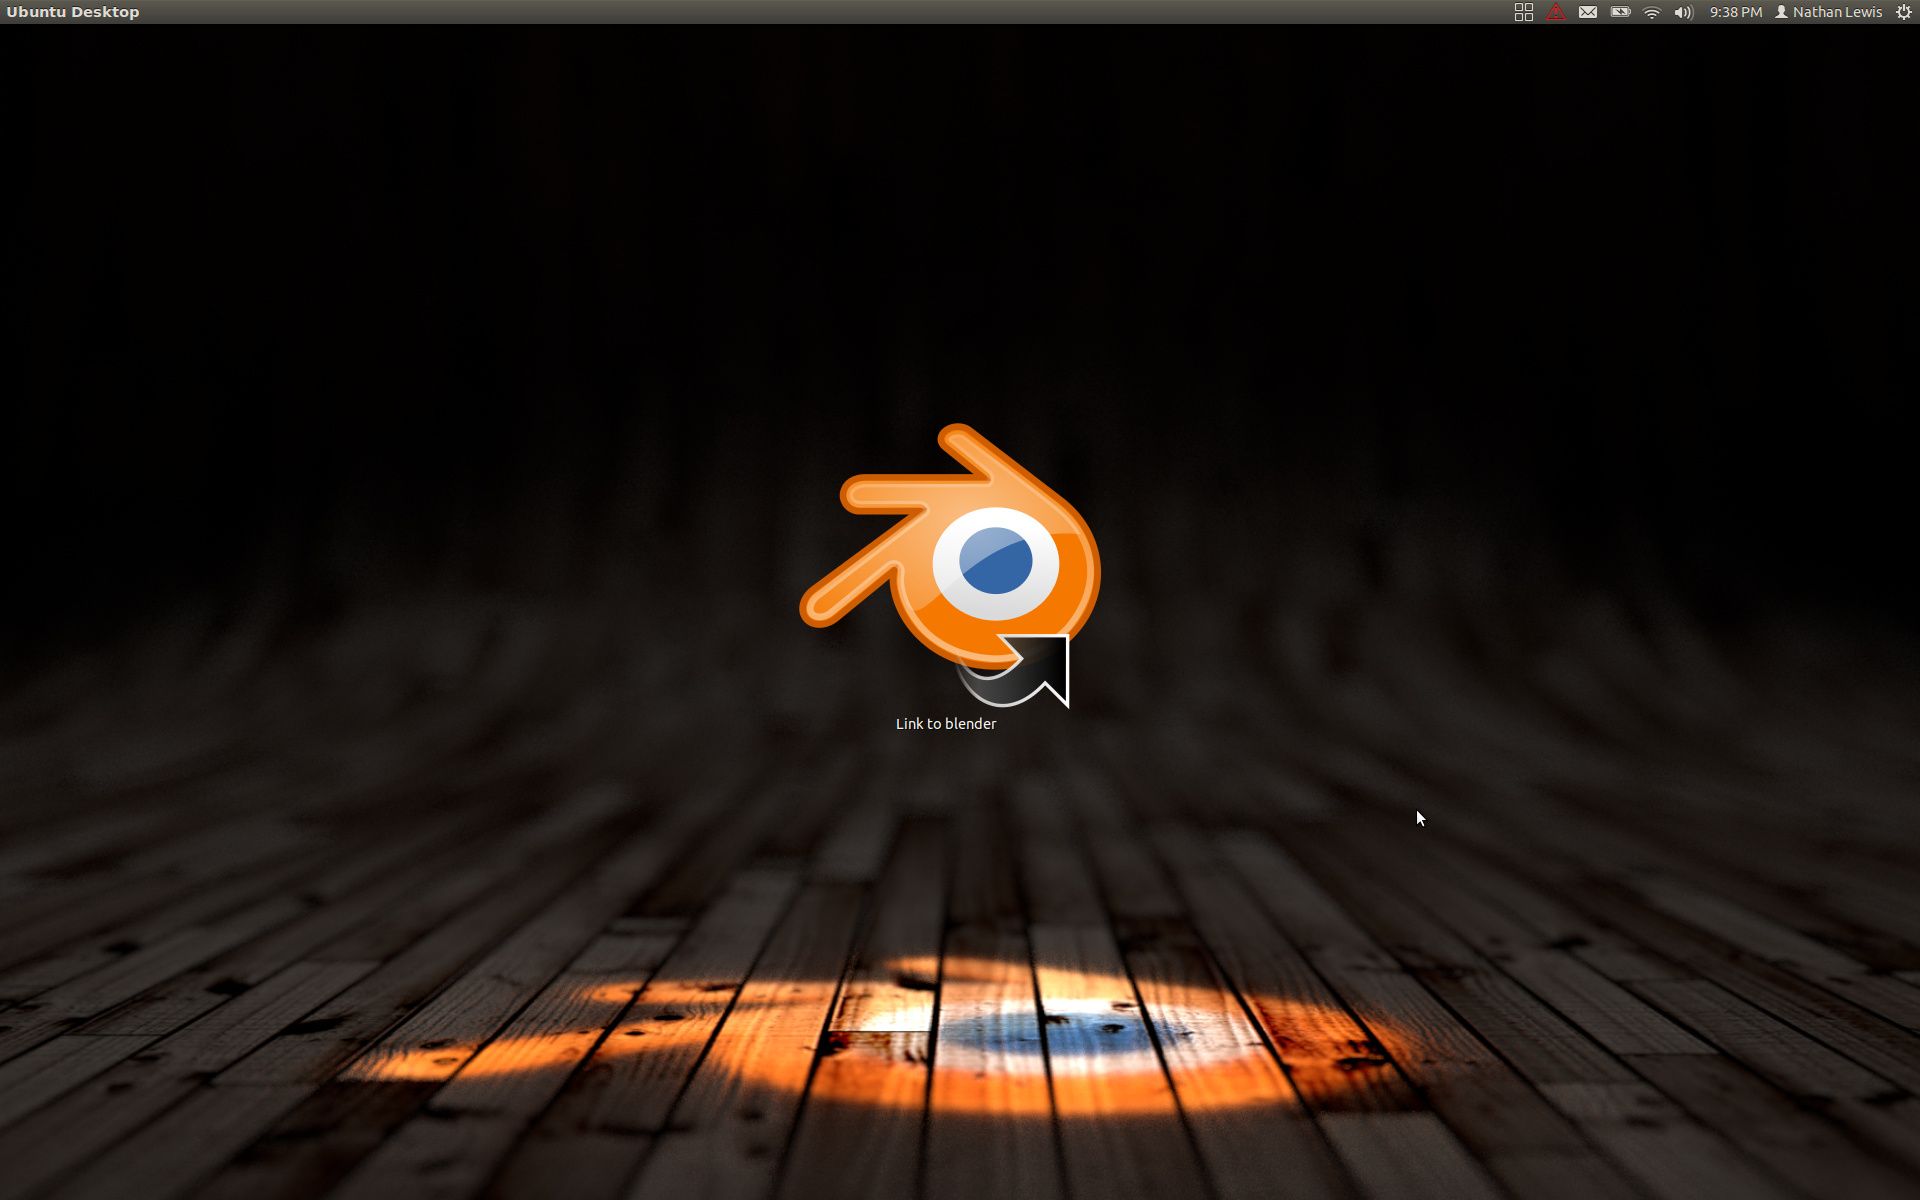  Blender Hintergrundbild 1920x1200. A new Ubuntu Blender Wallpaper Projects Artists Community